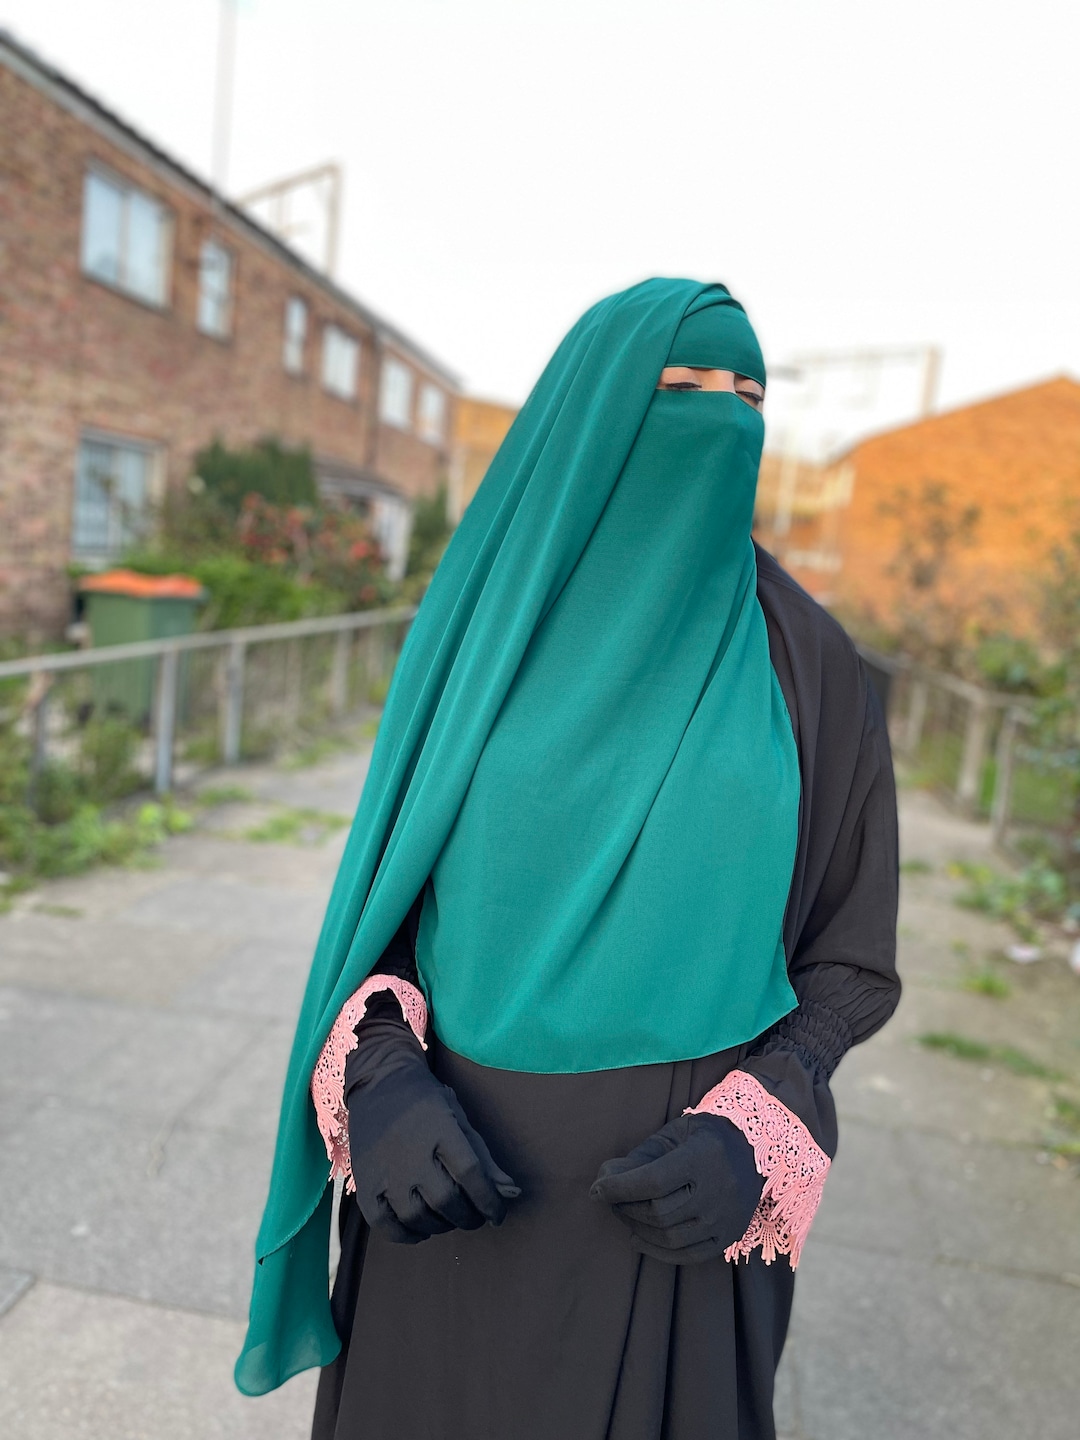 egypte niqab hijab jilbab burqa Adult Pictures